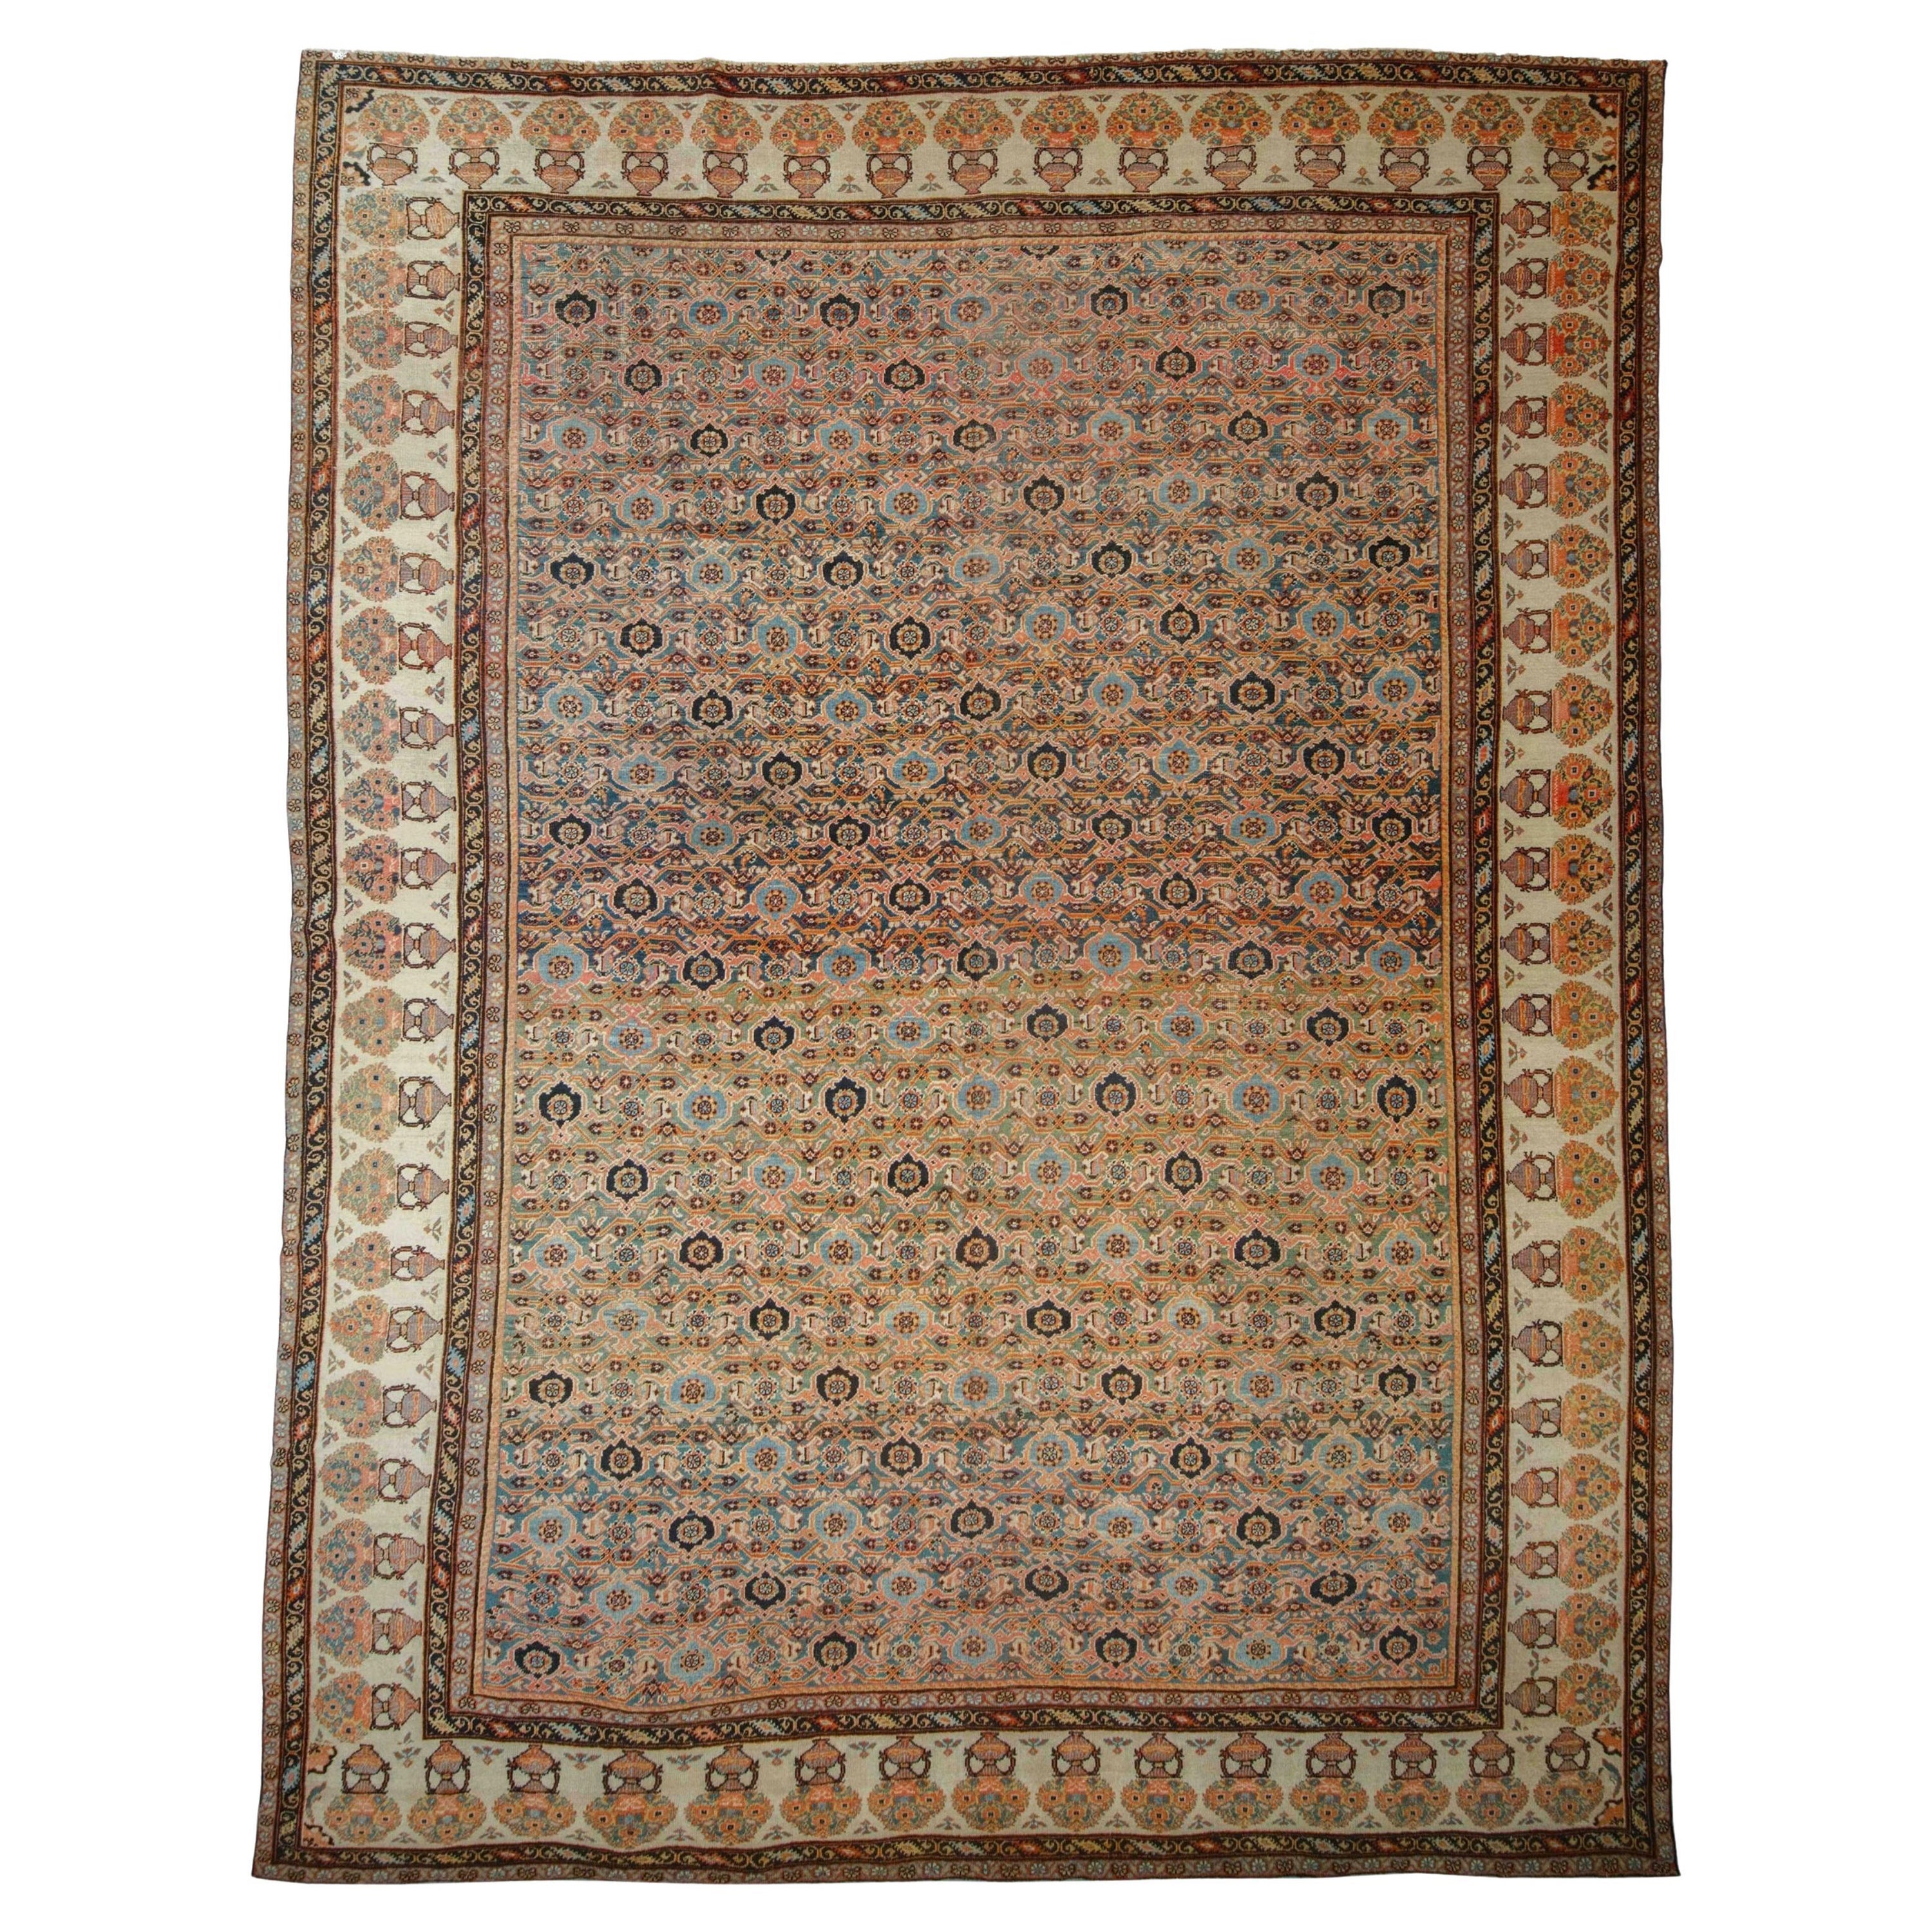 Antique Mahal Carpet - Late of 19th Century Mahal Rug, Antique Rug